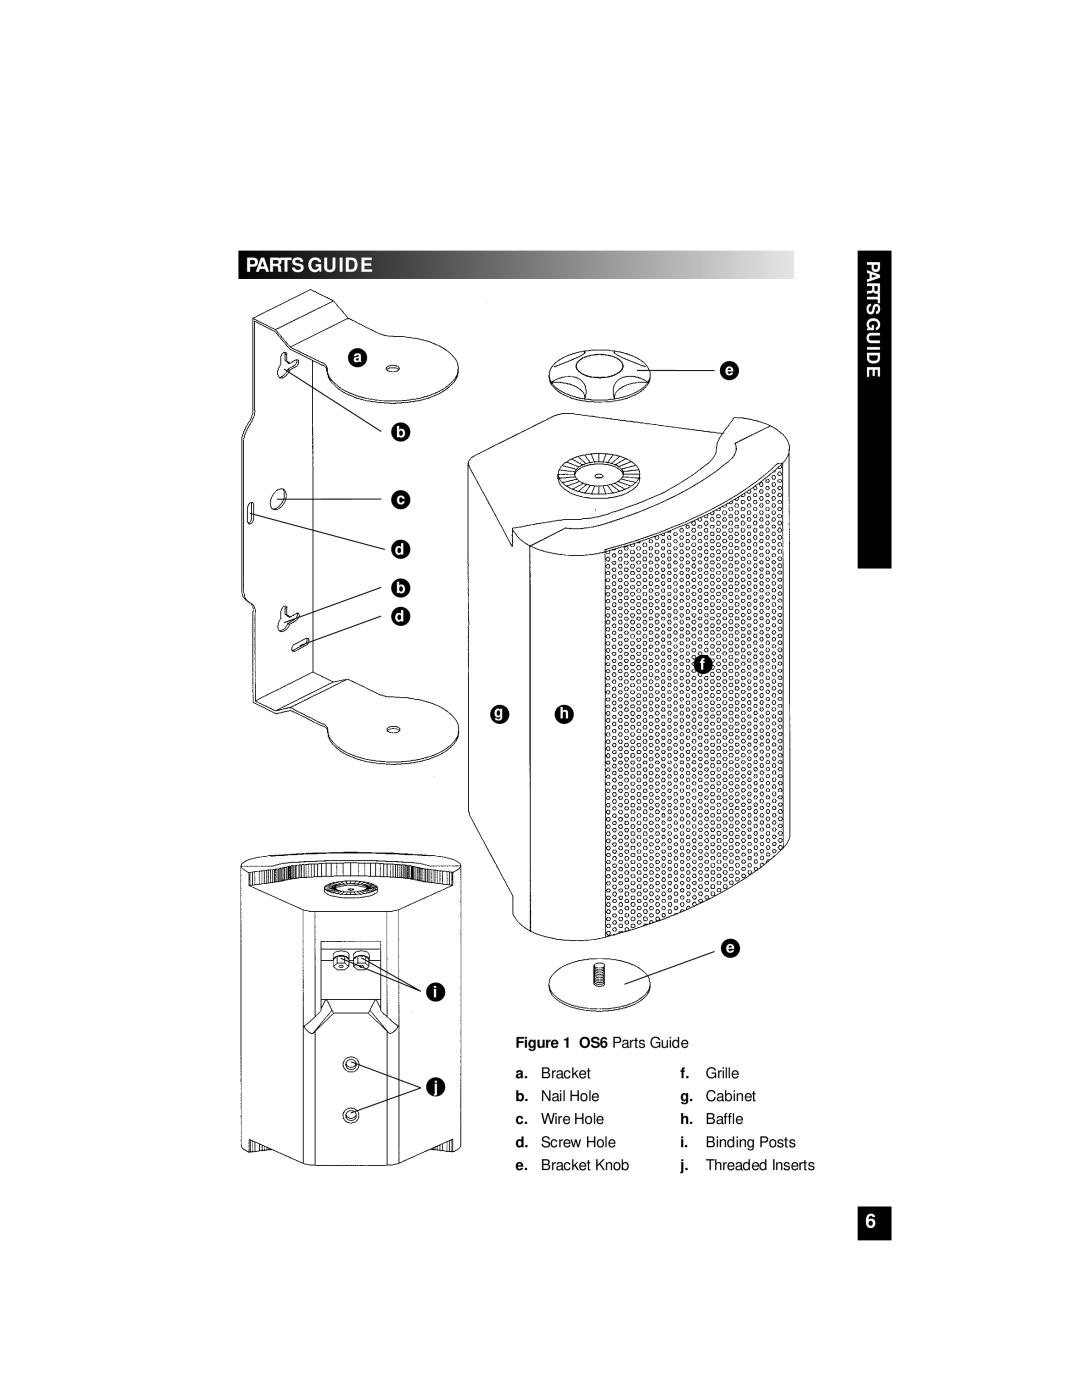 Niles Audio OS6 manual Partsguide, Parts Guide, a e b c d b d f g h 